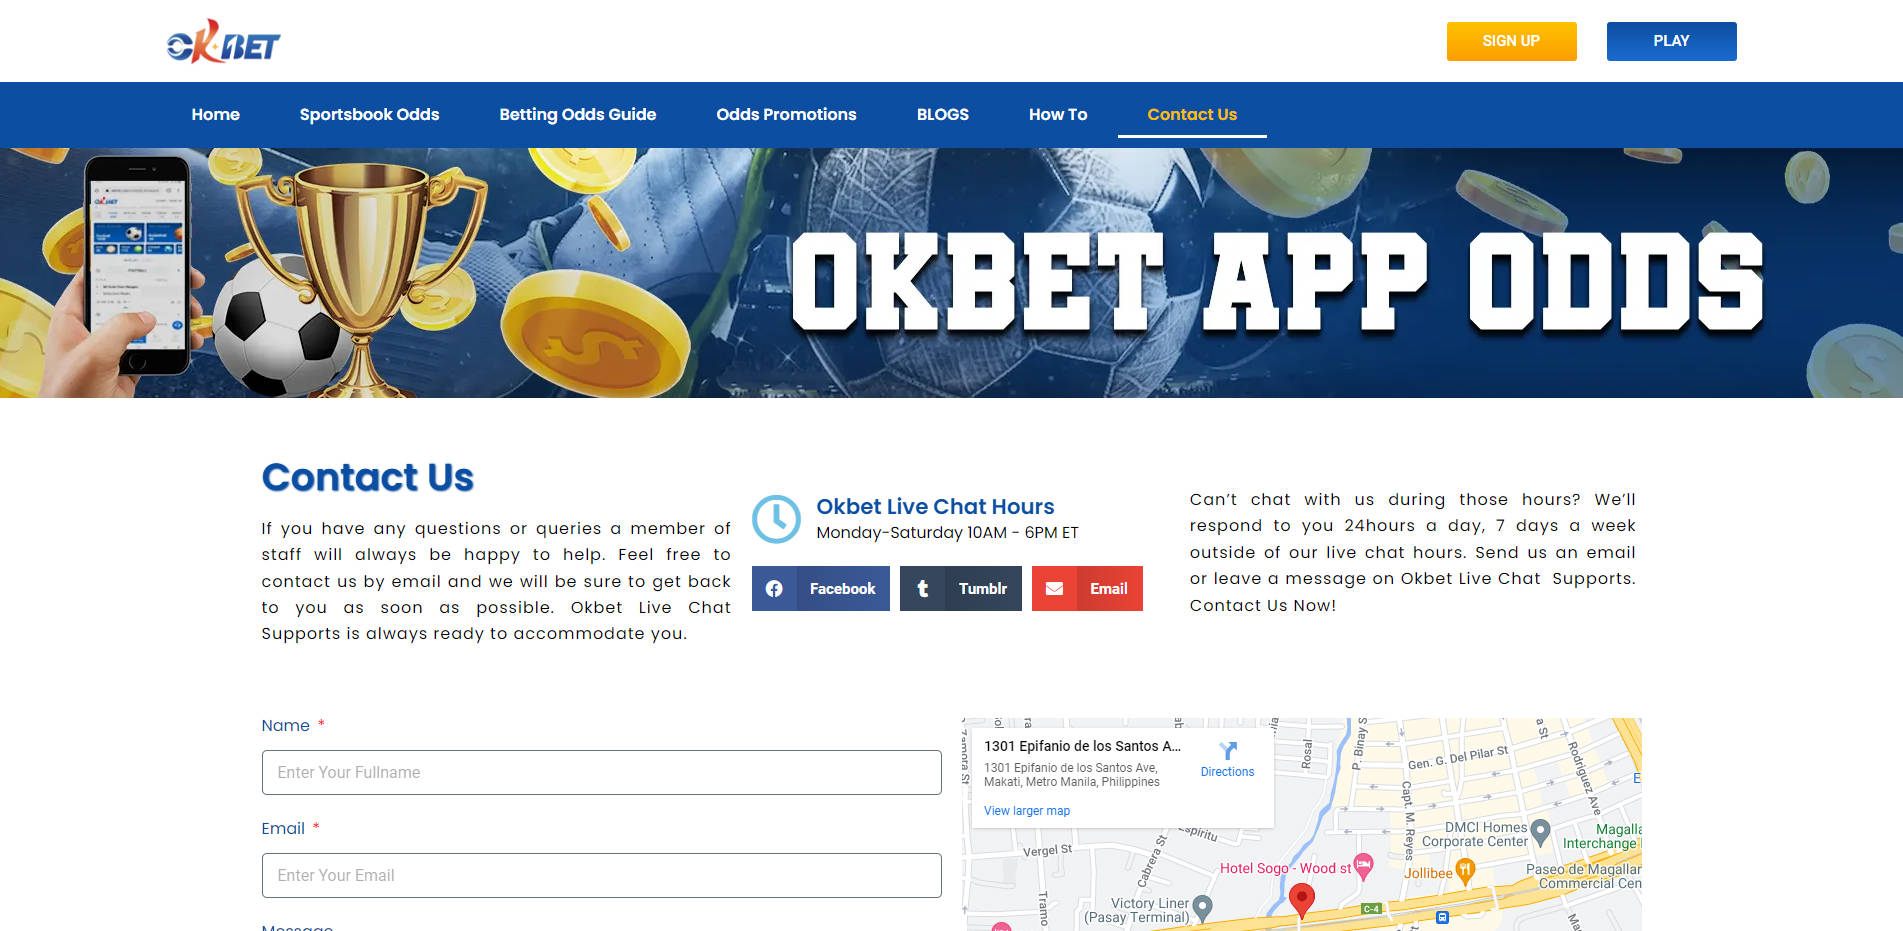 OKBet - How to Get Started with OKBet - Feature 4 - ok4bet